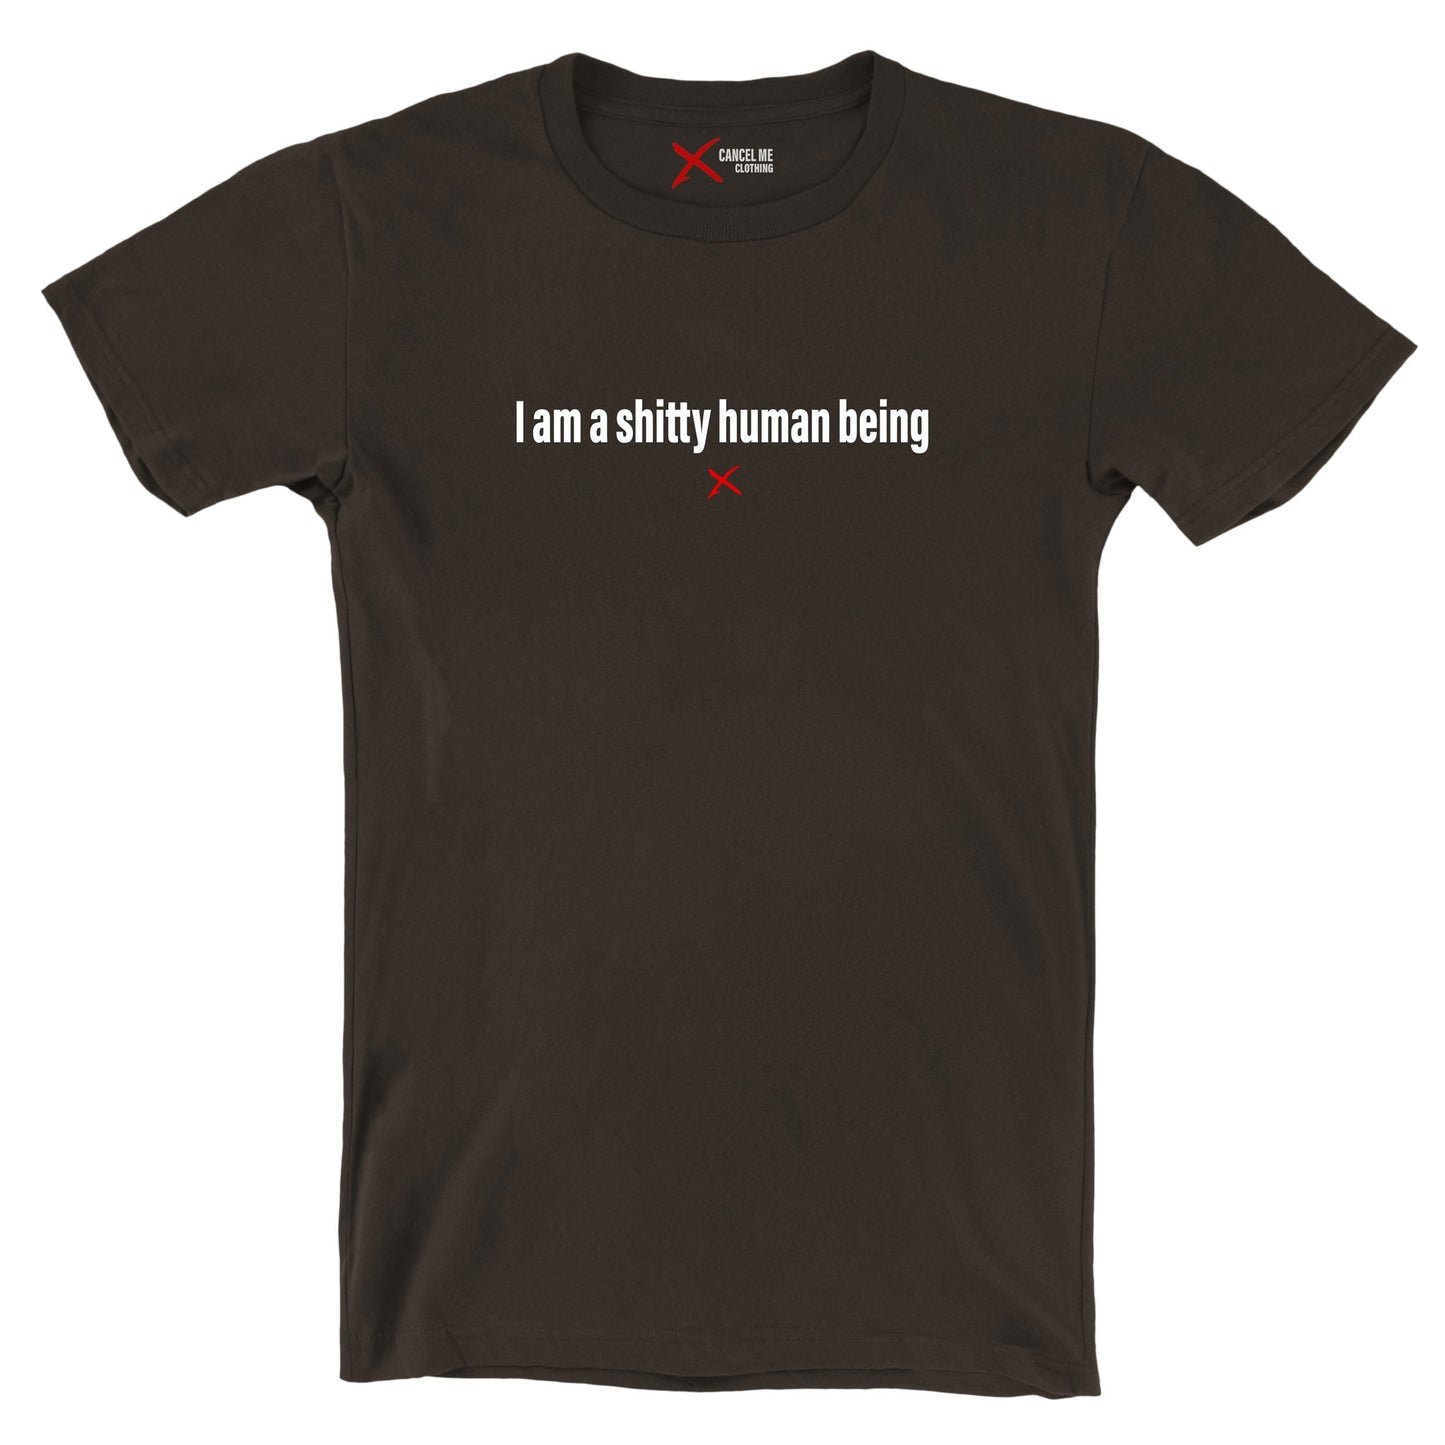 I am a shitty human being - Shirt